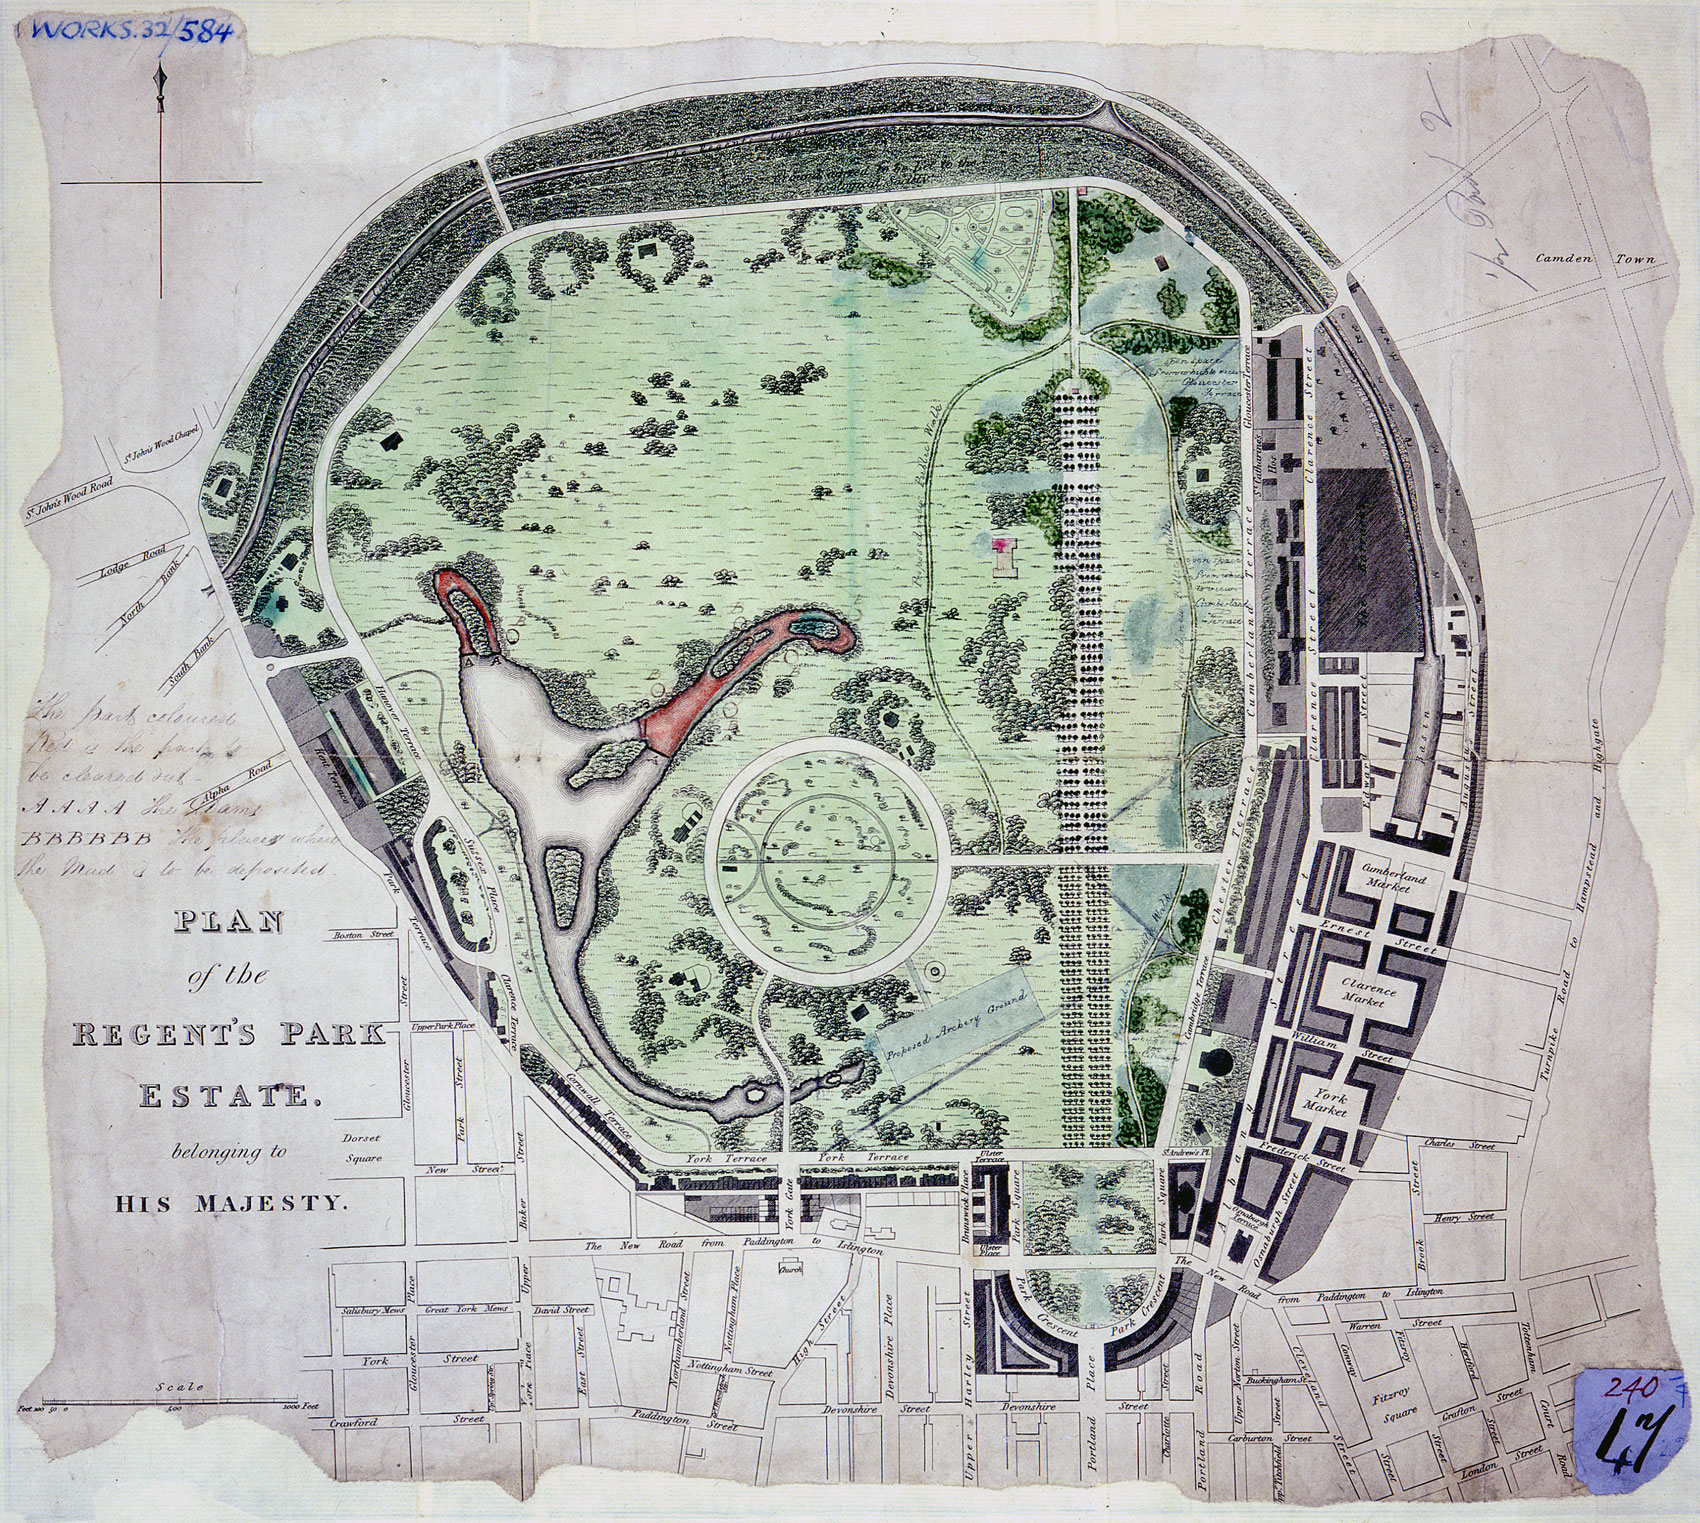 The Regent's Park History